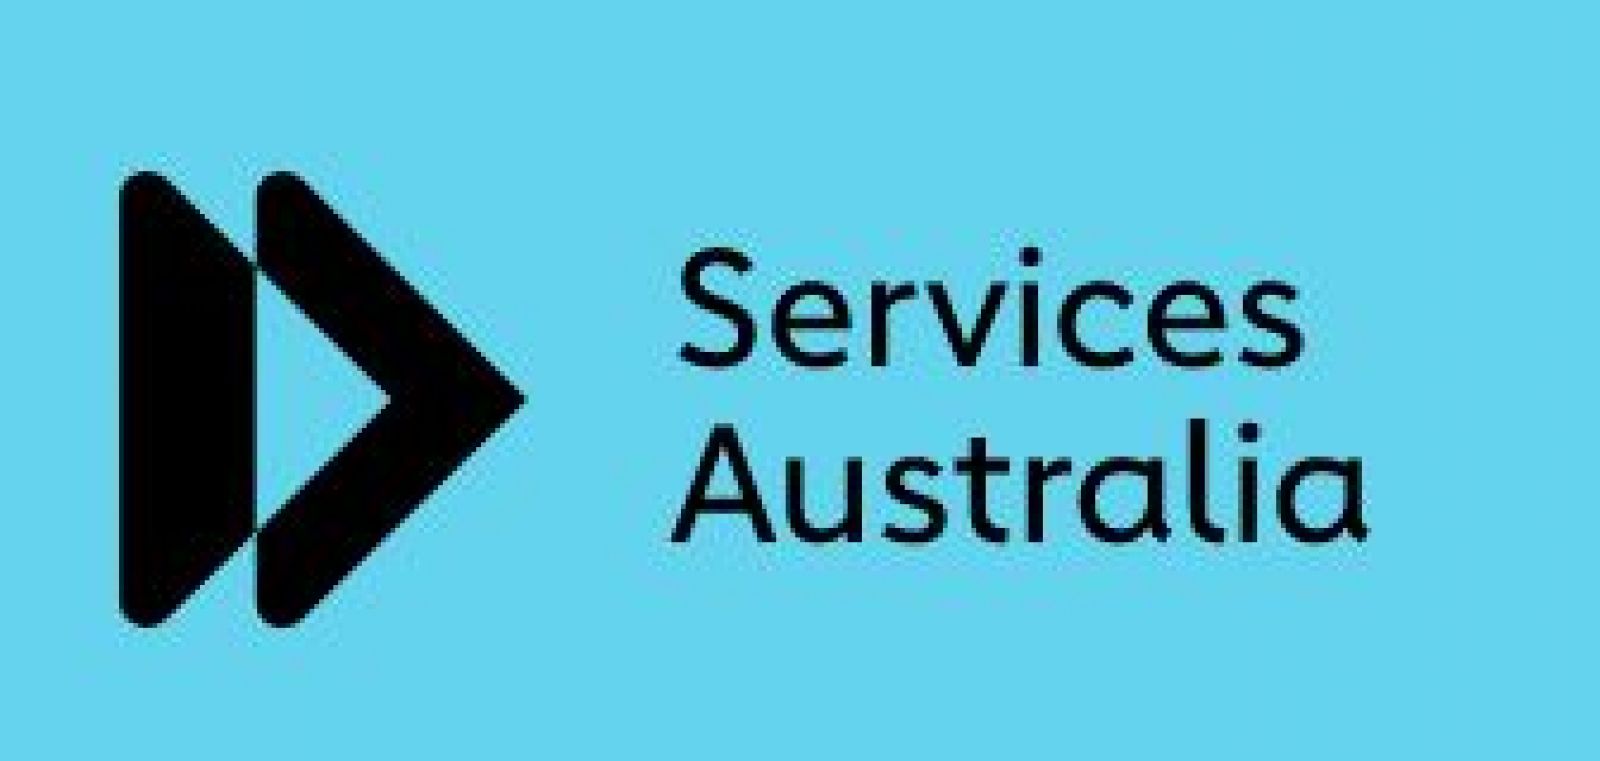 Services Australia